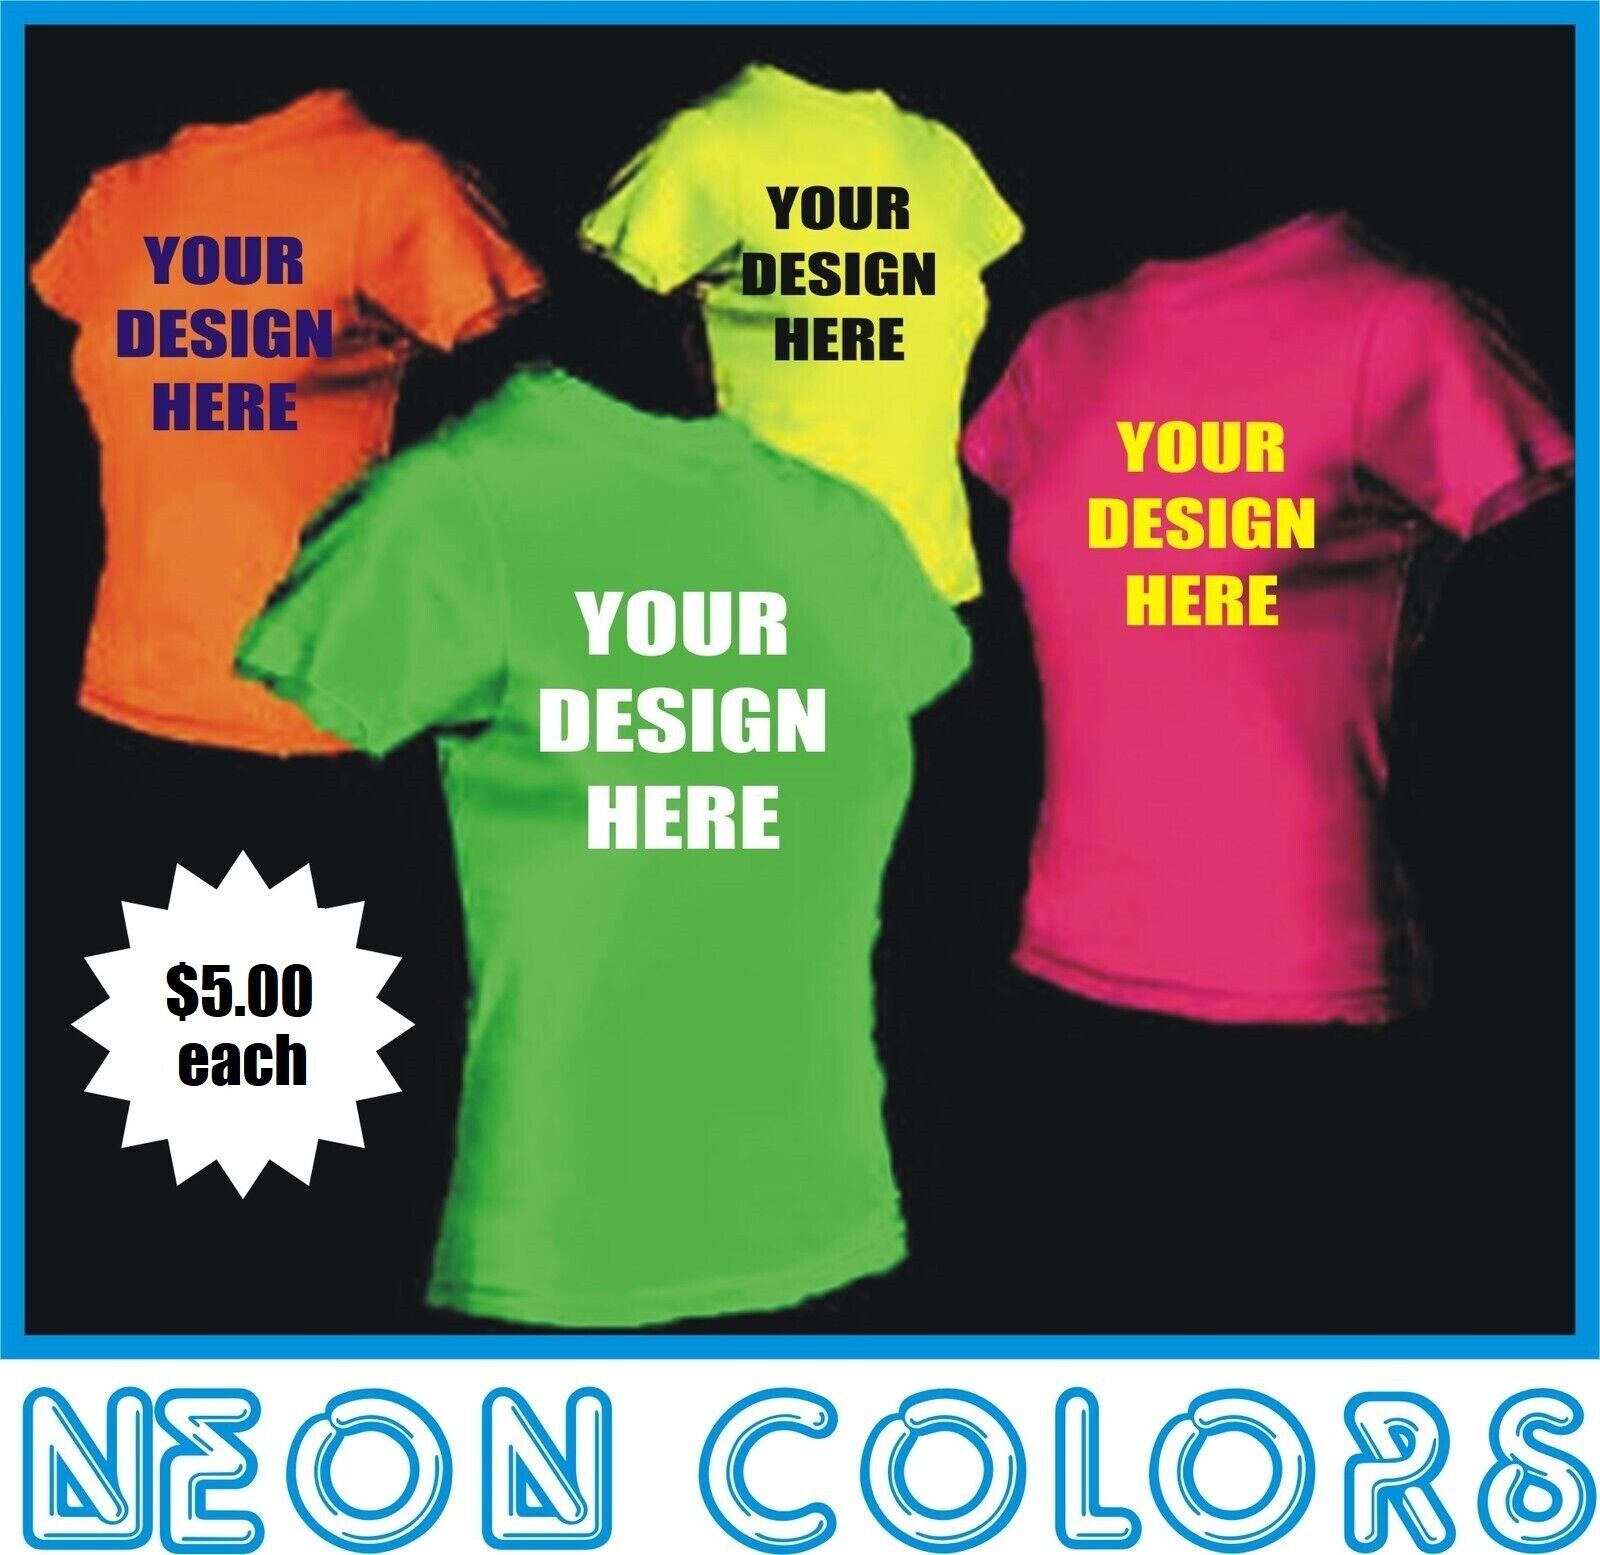 100 Custom Screen Printed NEON COLOR T-Shirts - $5.00 each Без бренда